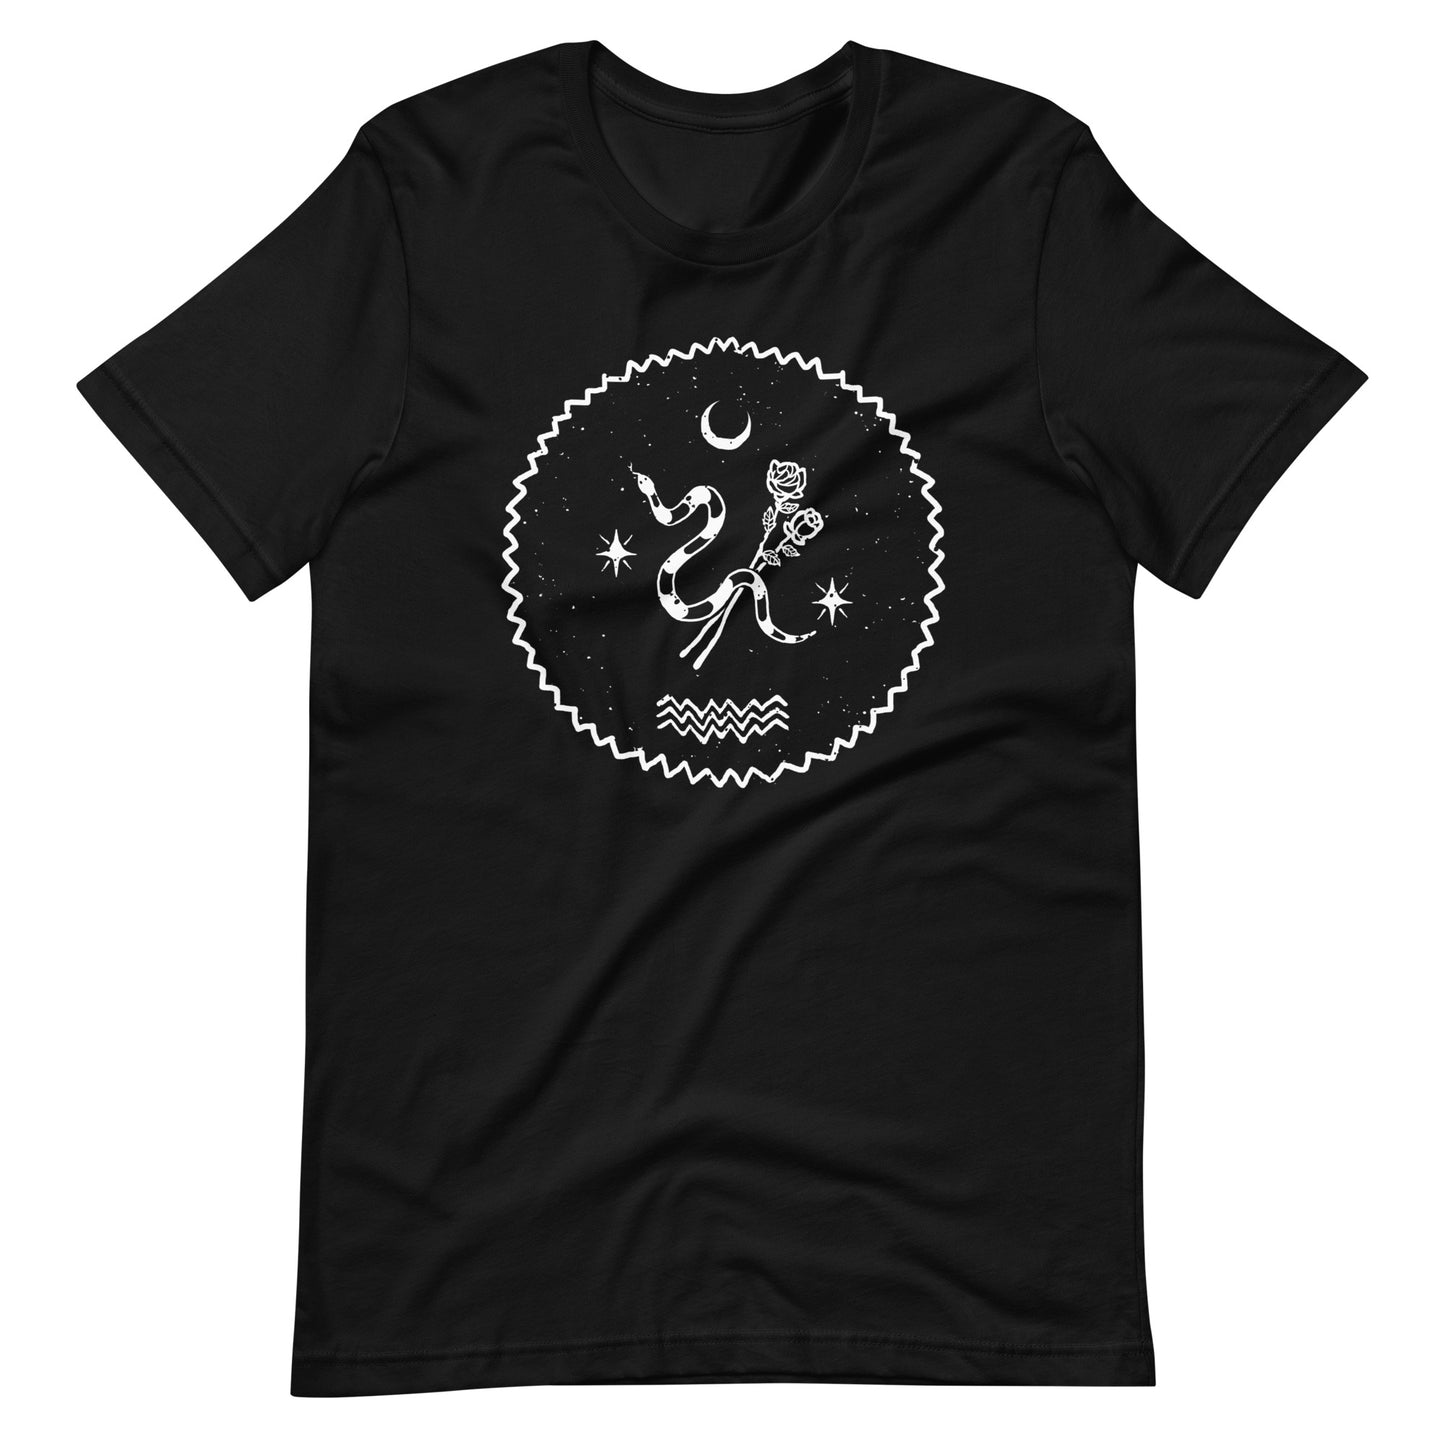 Scented Poison - Men's t-shirt - Black Front